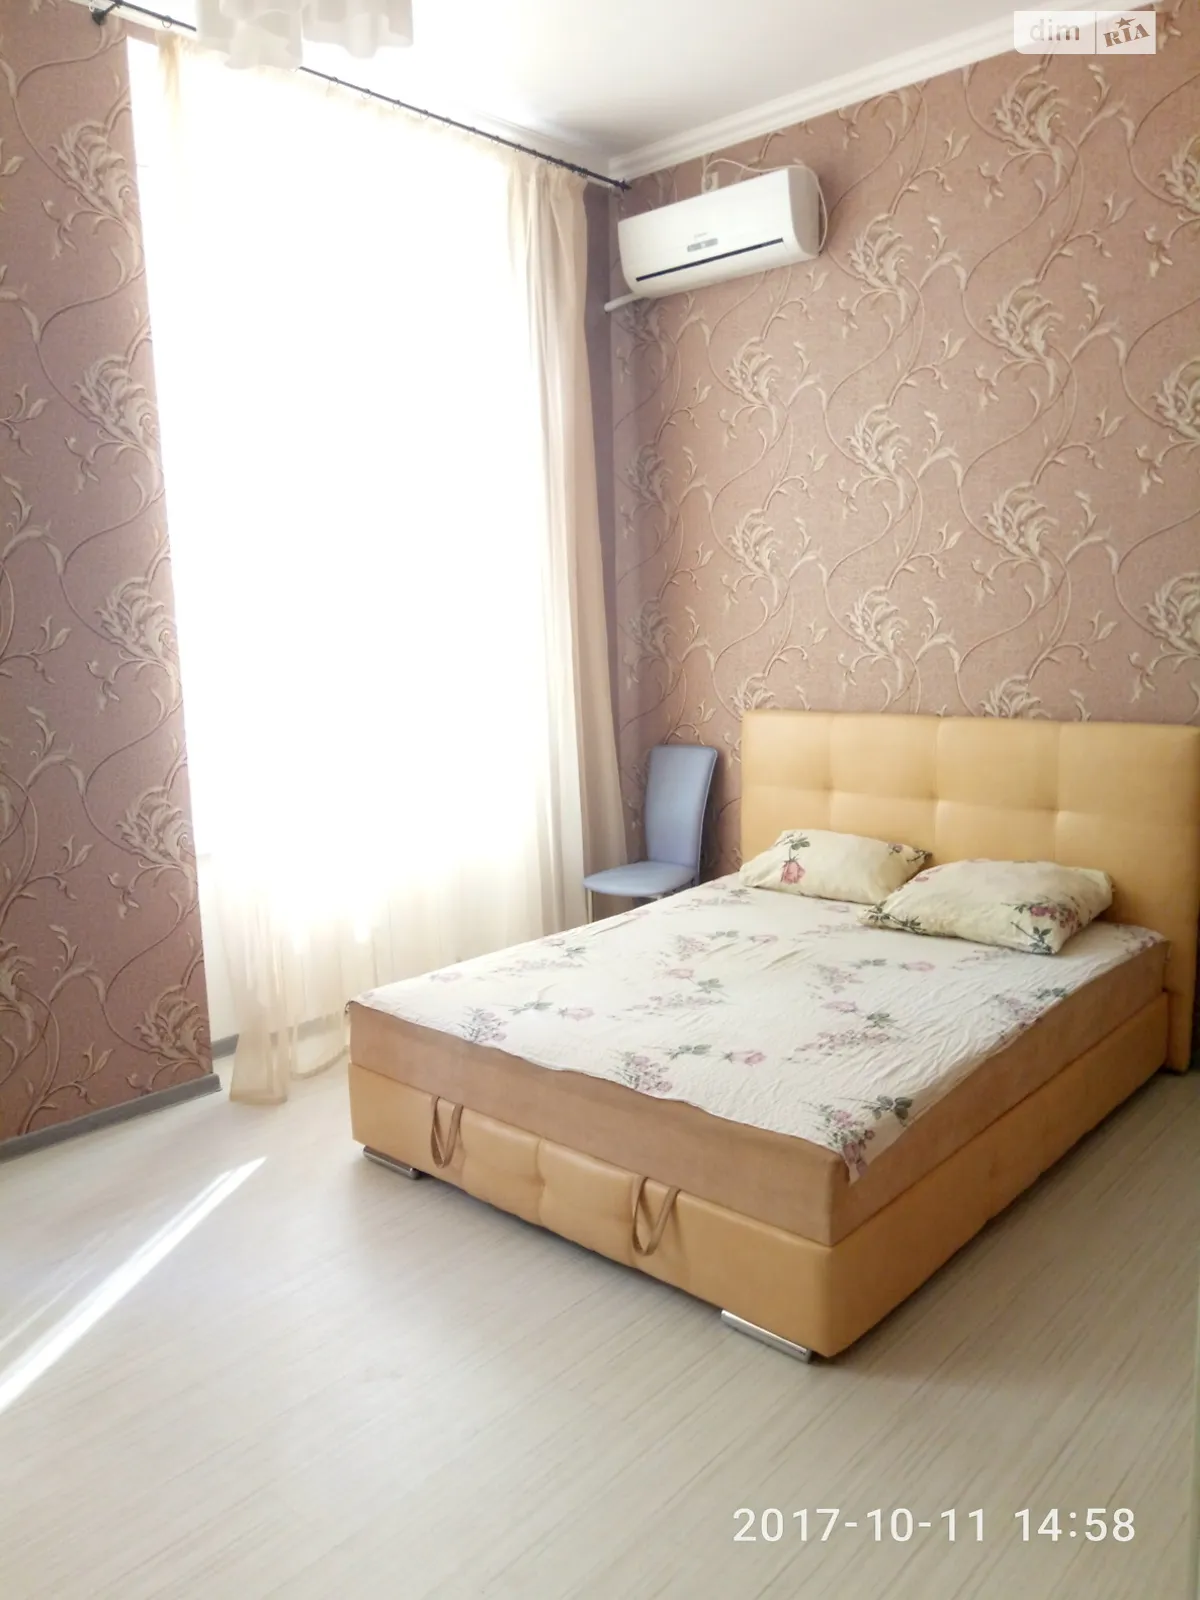 Сдается в аренду 1-комнатная квартира 40 кв. м в Одессе, ул. Бунина, 8 - фото 1